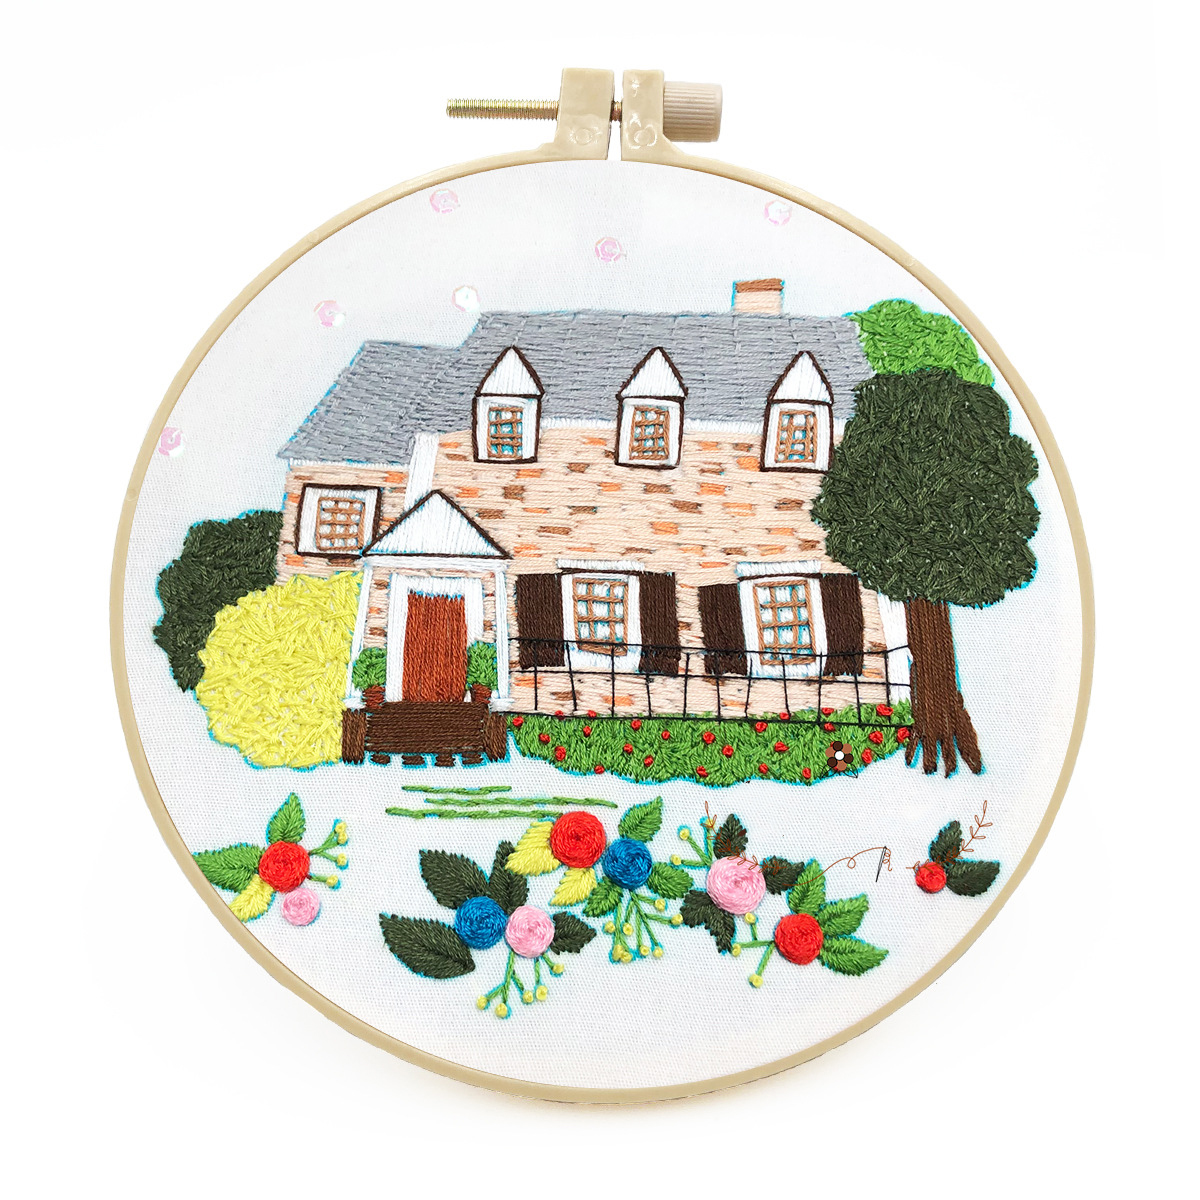 DIY Handmade Embroidery Cross stitch kit - Castle pattern